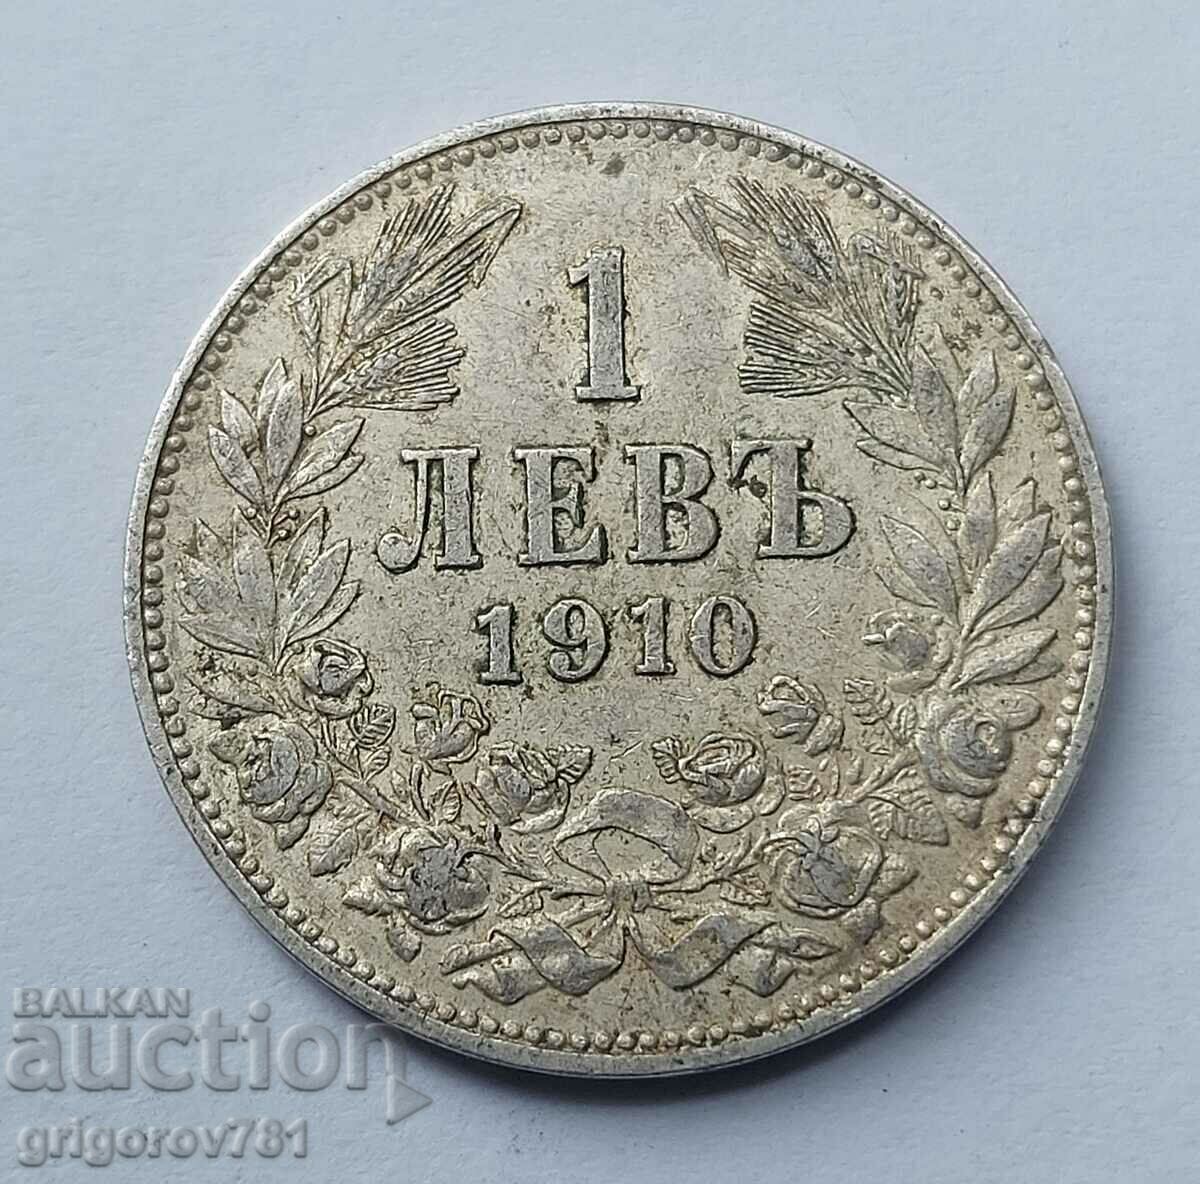 1 lev silver 1910 - silver coin #12